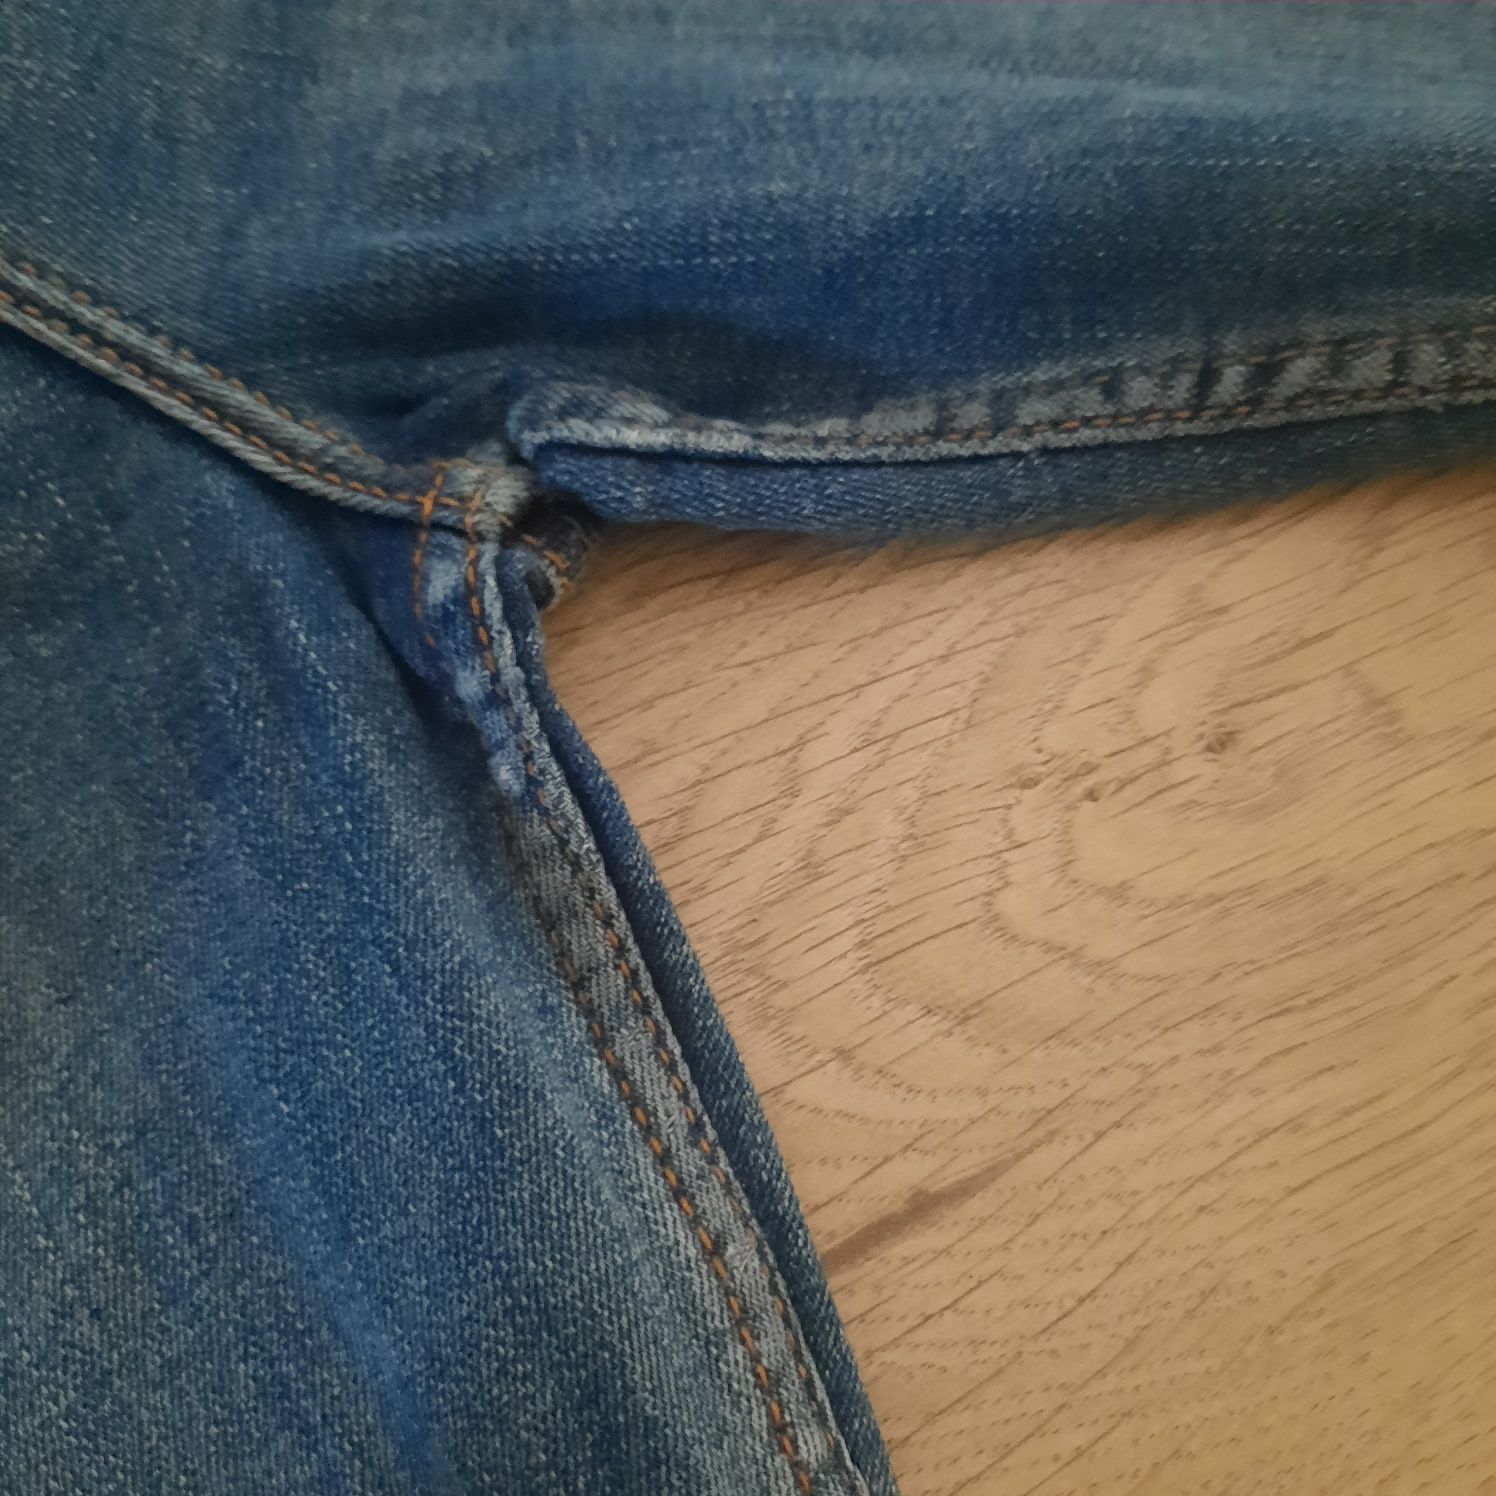 Spodnie jeans Zara r.46